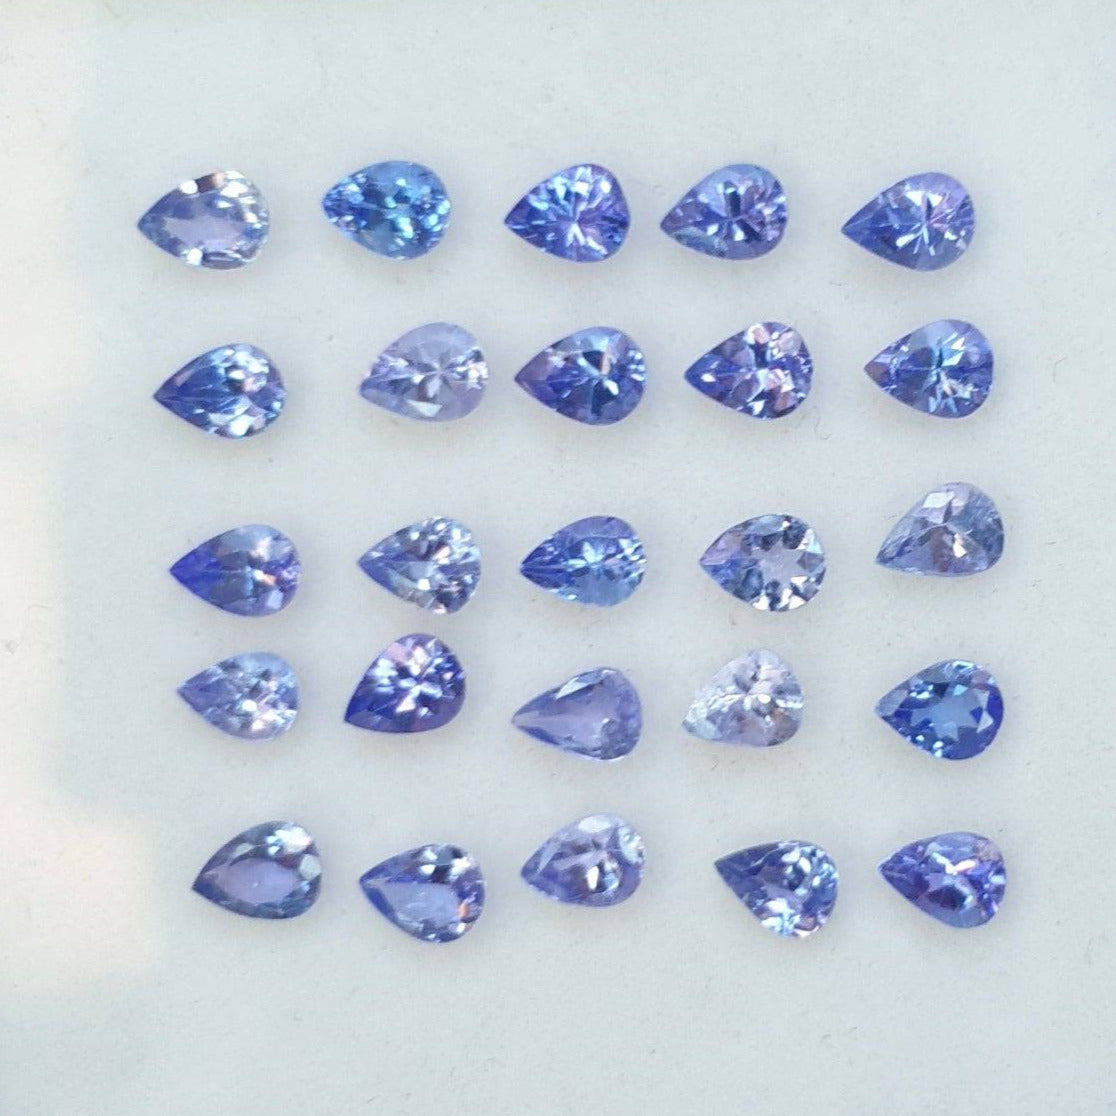 25pcs Natural Tanzanite Faceted Gemstones Pear 4x3mm Lot Untreated - The LabradoriteKing